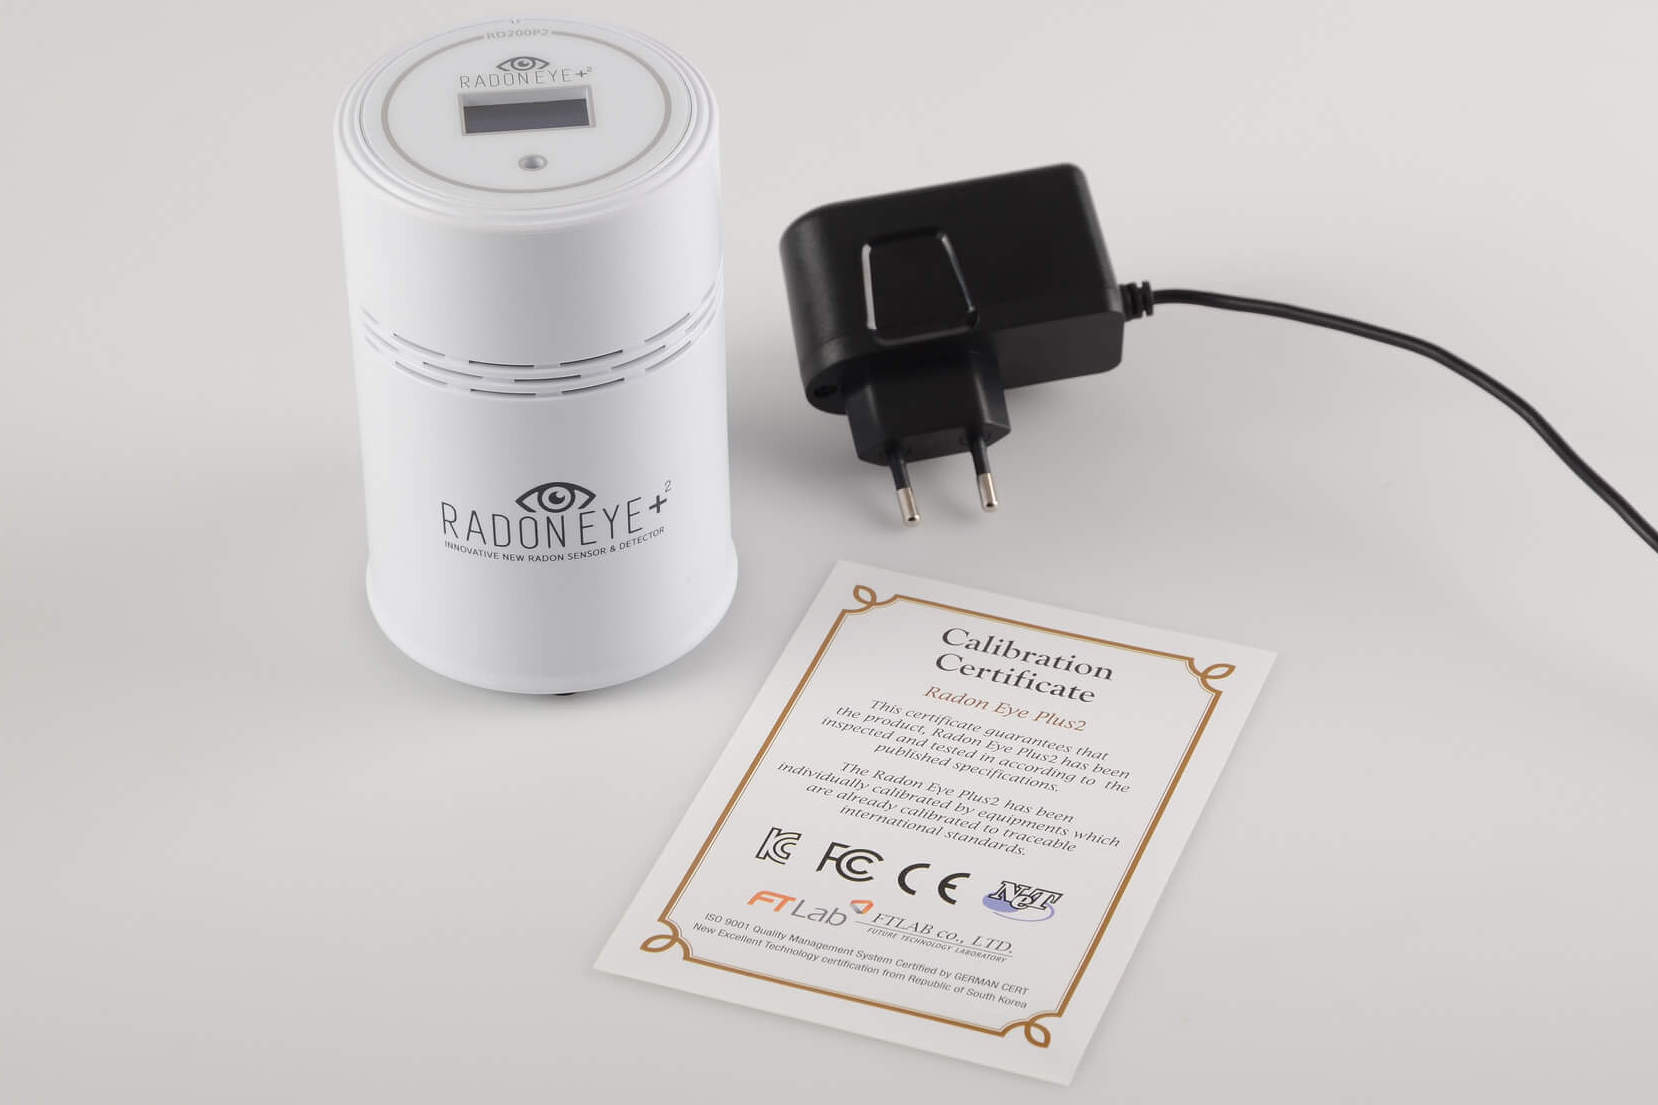 Radoneye Plus2 Radonmessgerät mit Zertifikat